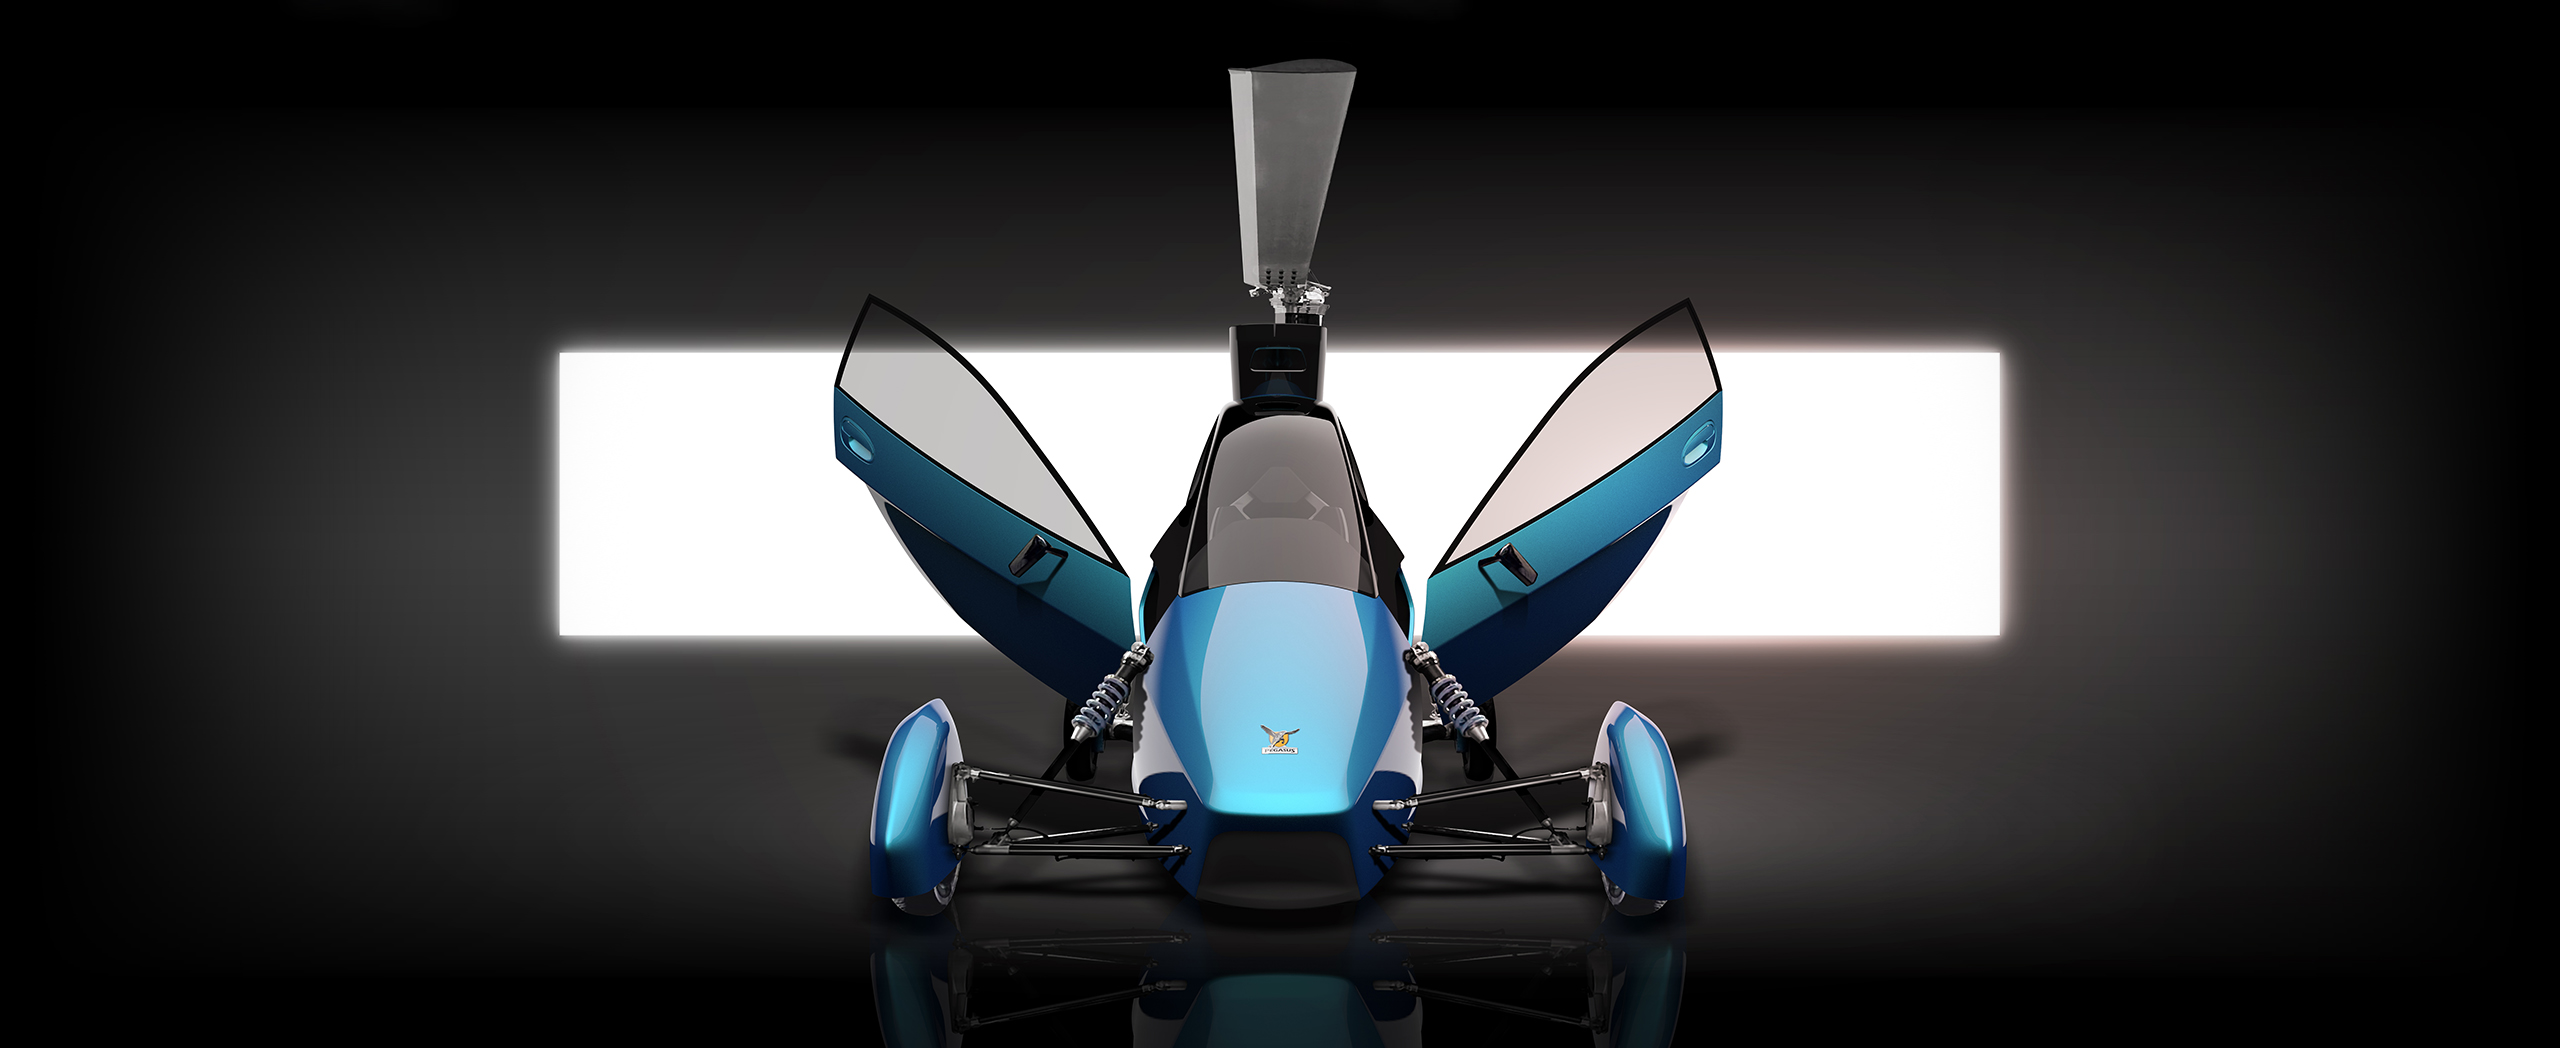 Pegasus Flying Car (eVOTL) | Automotive Styling | Surfacing Design and Development | Design + Industry: Complete Product Development (Industrial Design)